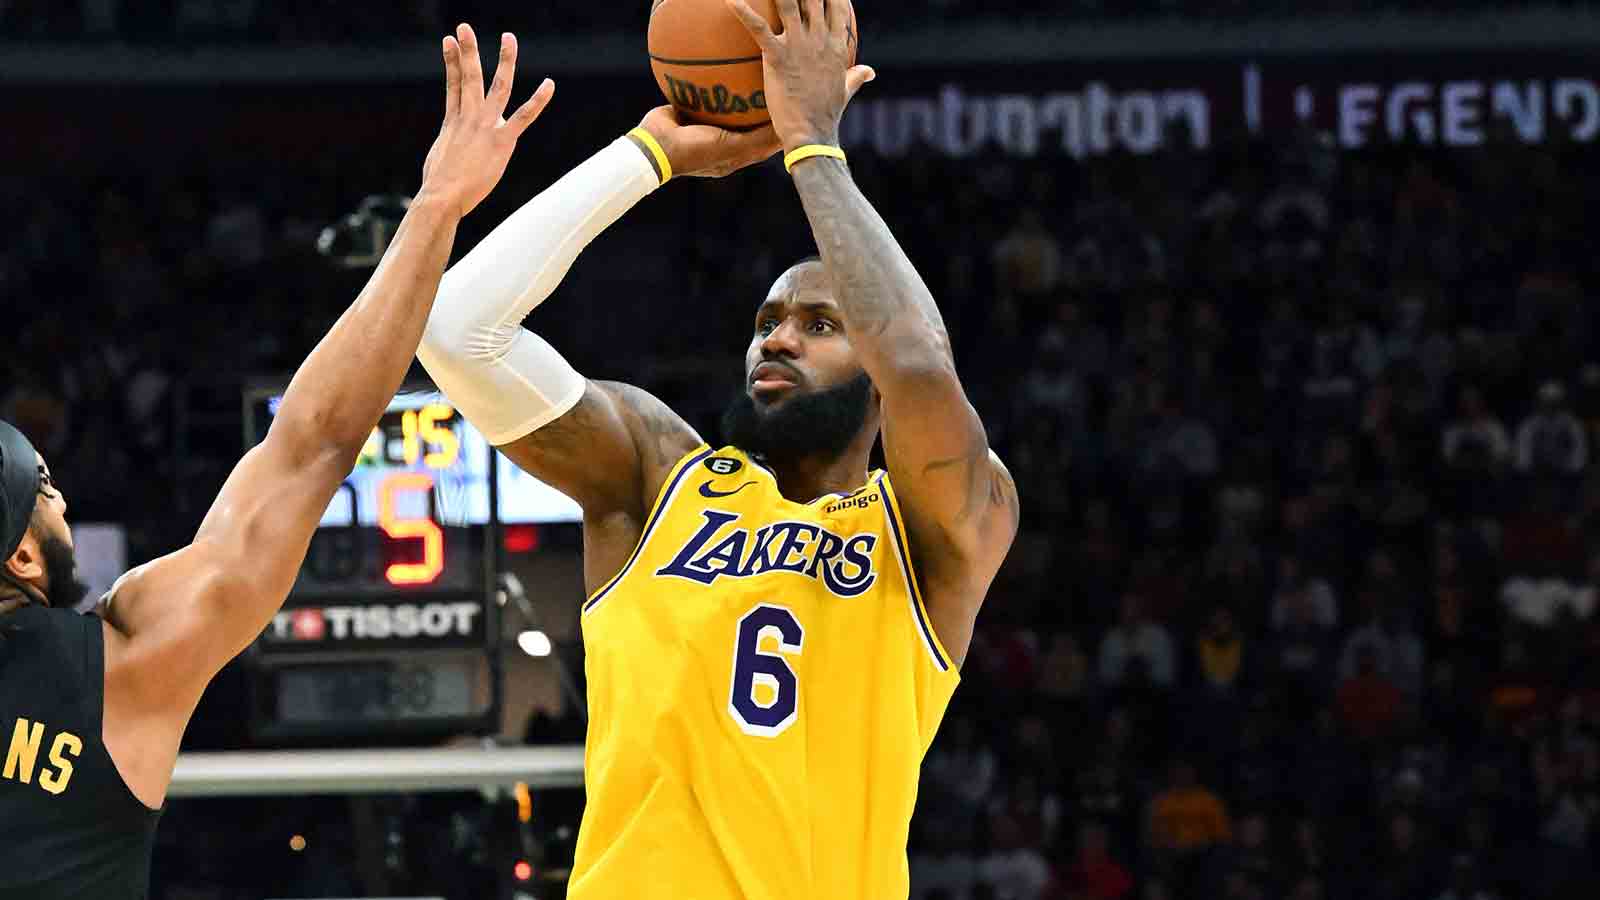 Los Angeles Lakers: LeBron James 2023 All-Time Scoring Leader Shot